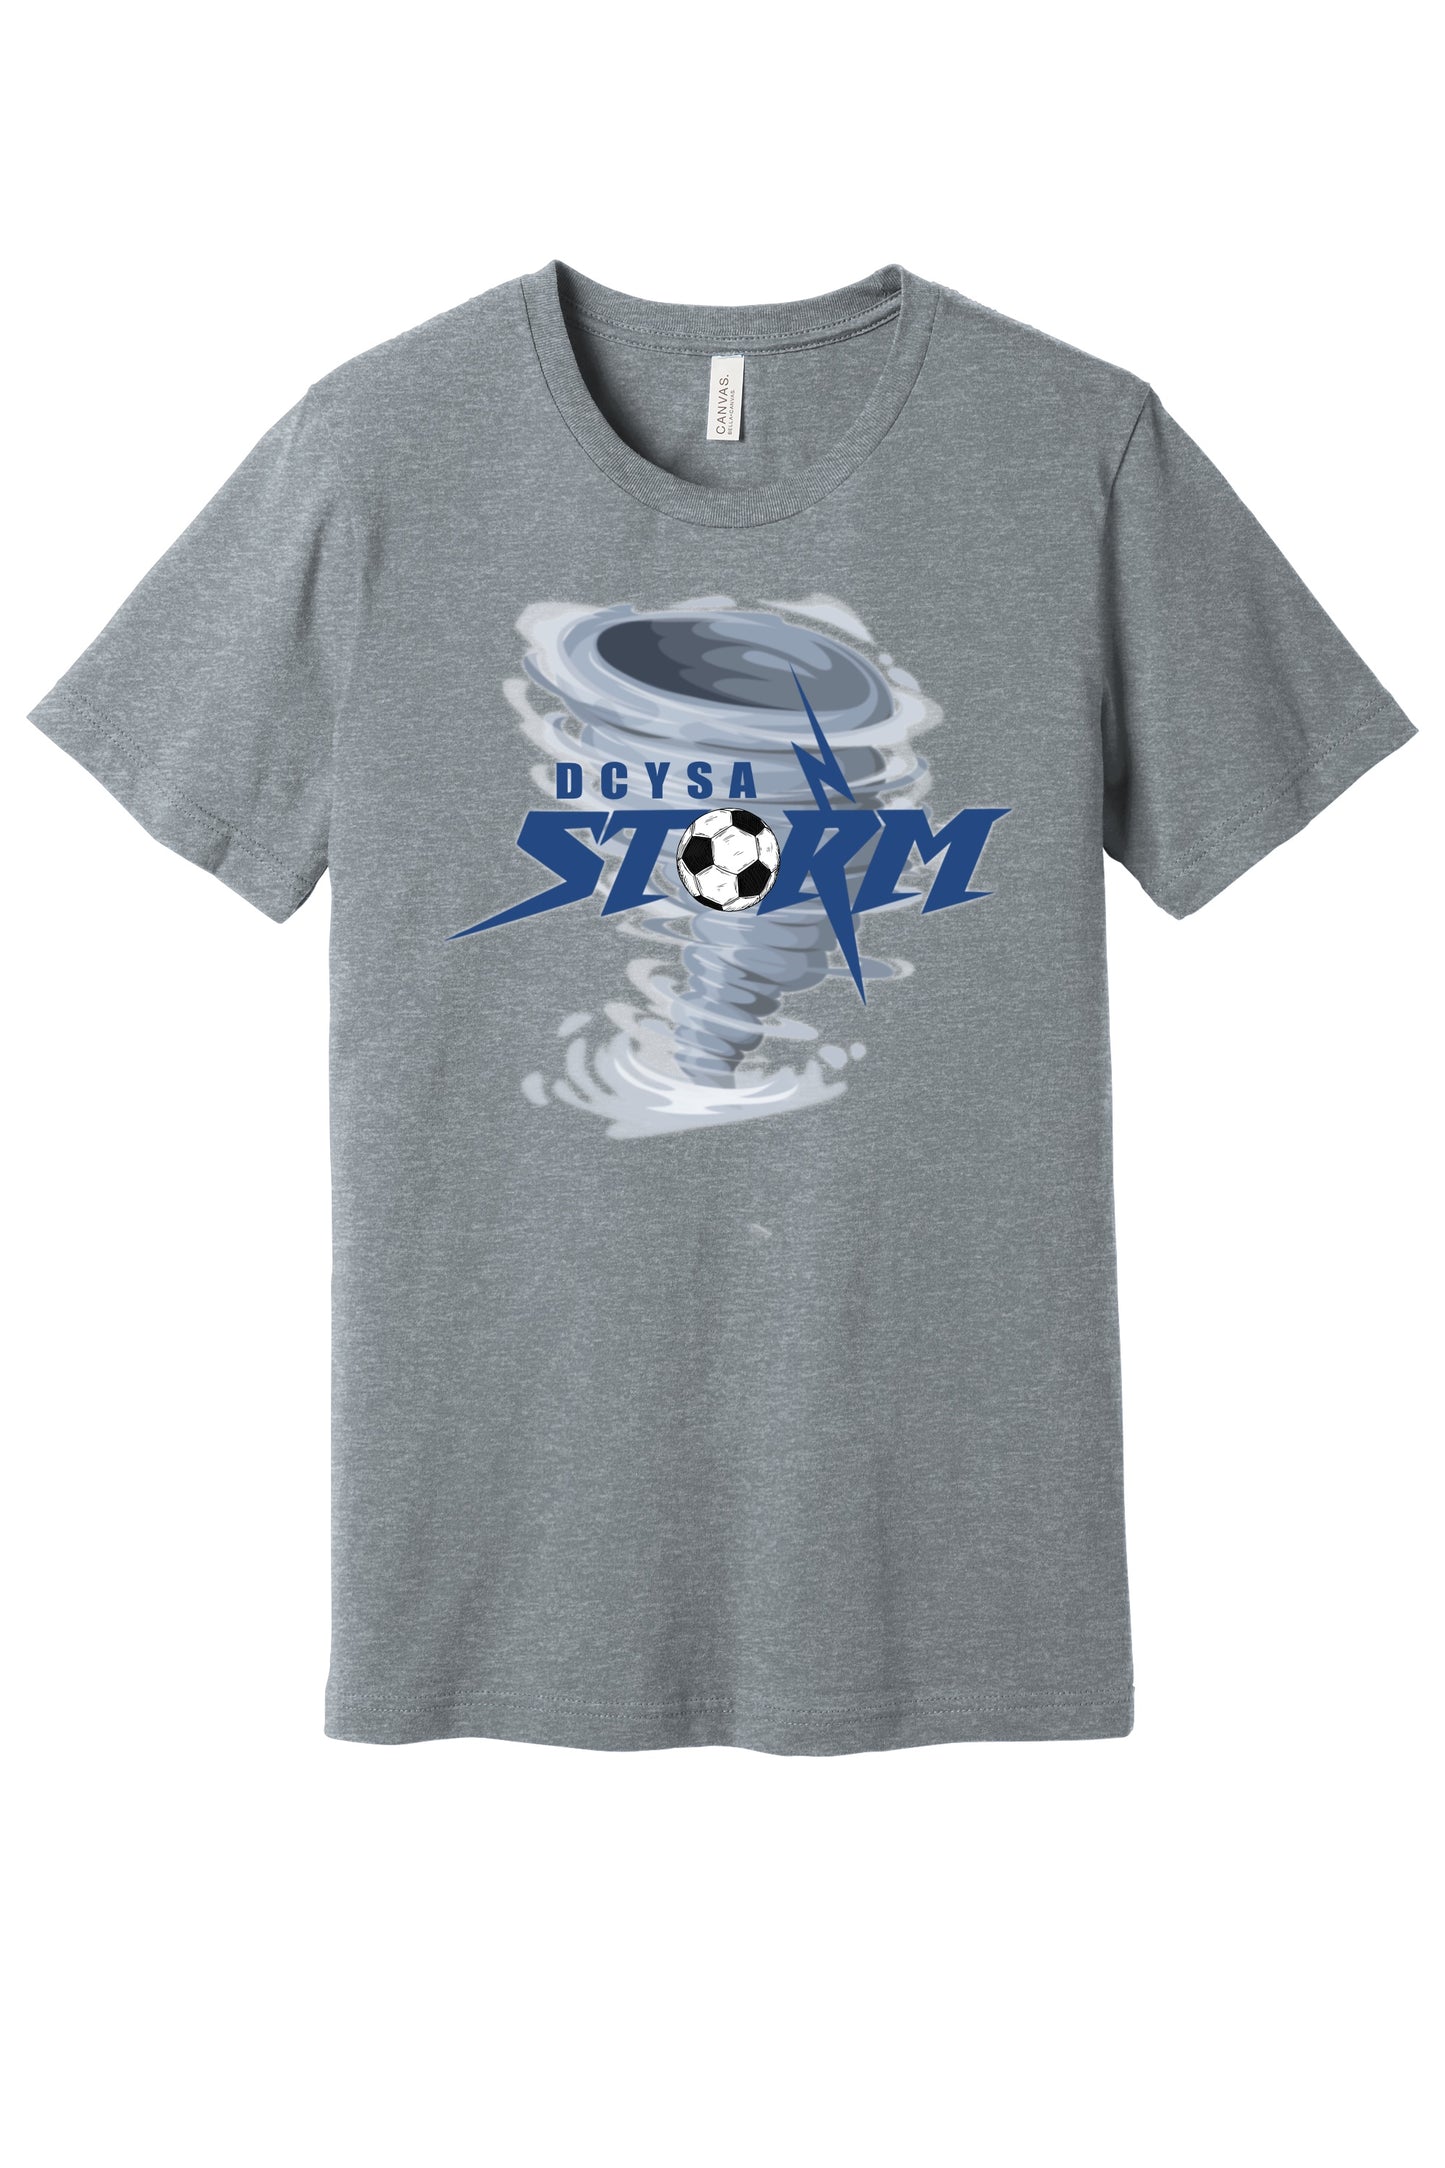 DCYSA Storm T-Shirt, Crewneck, & Hoodie